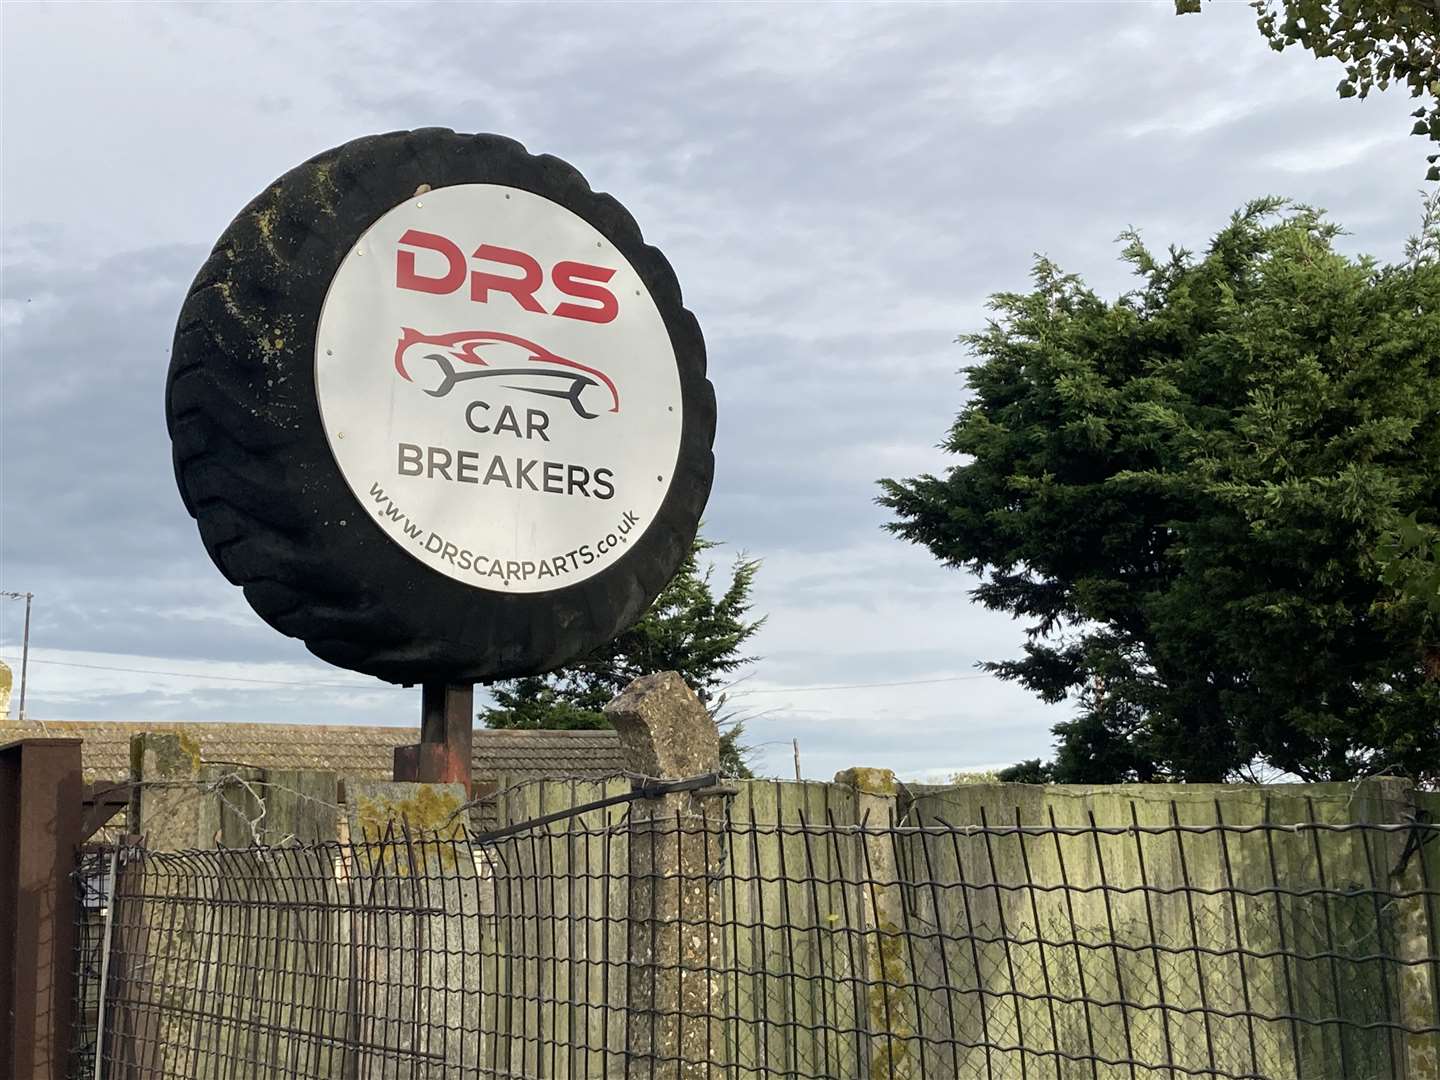 DRS car breakers at Monkey Farm, Sheerness